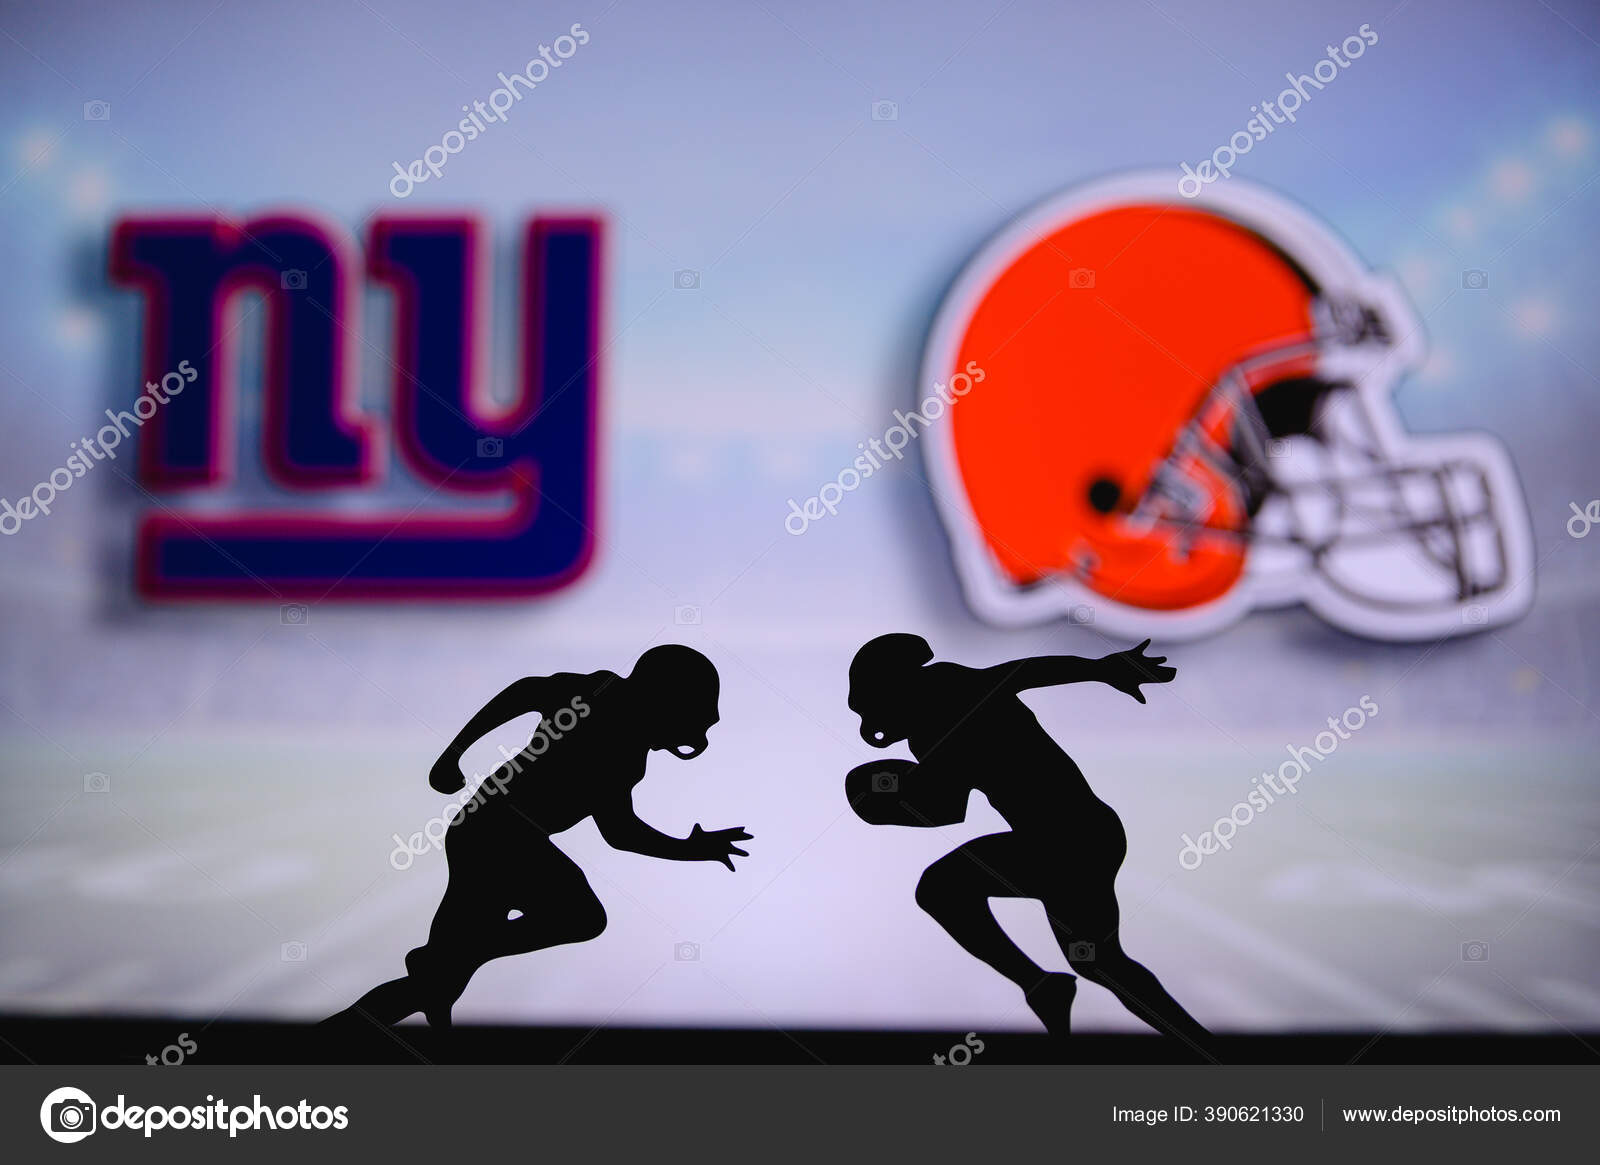 New York Giants Cleveland Browns Cartaz Nfl Dois Jogadores Futebol